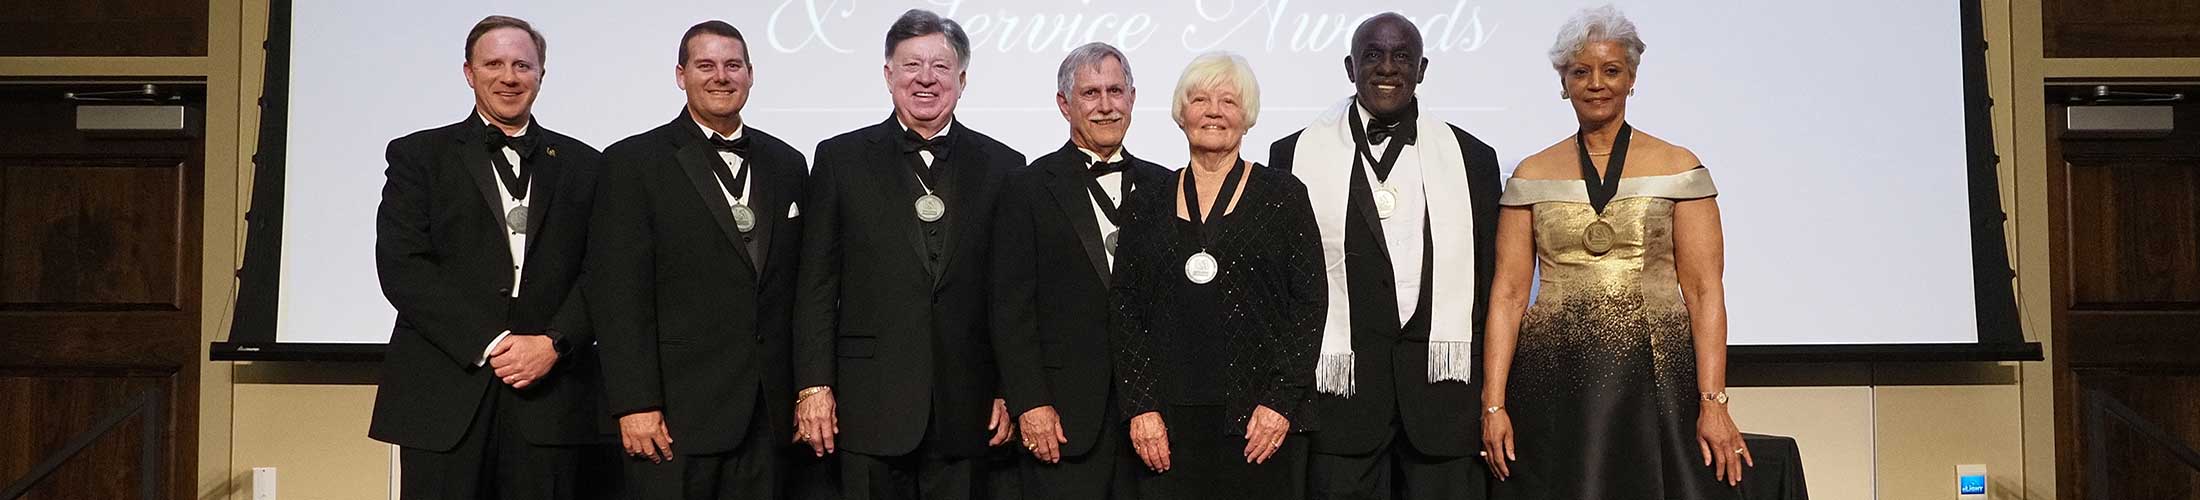 Alumni Distinguished awards recipients